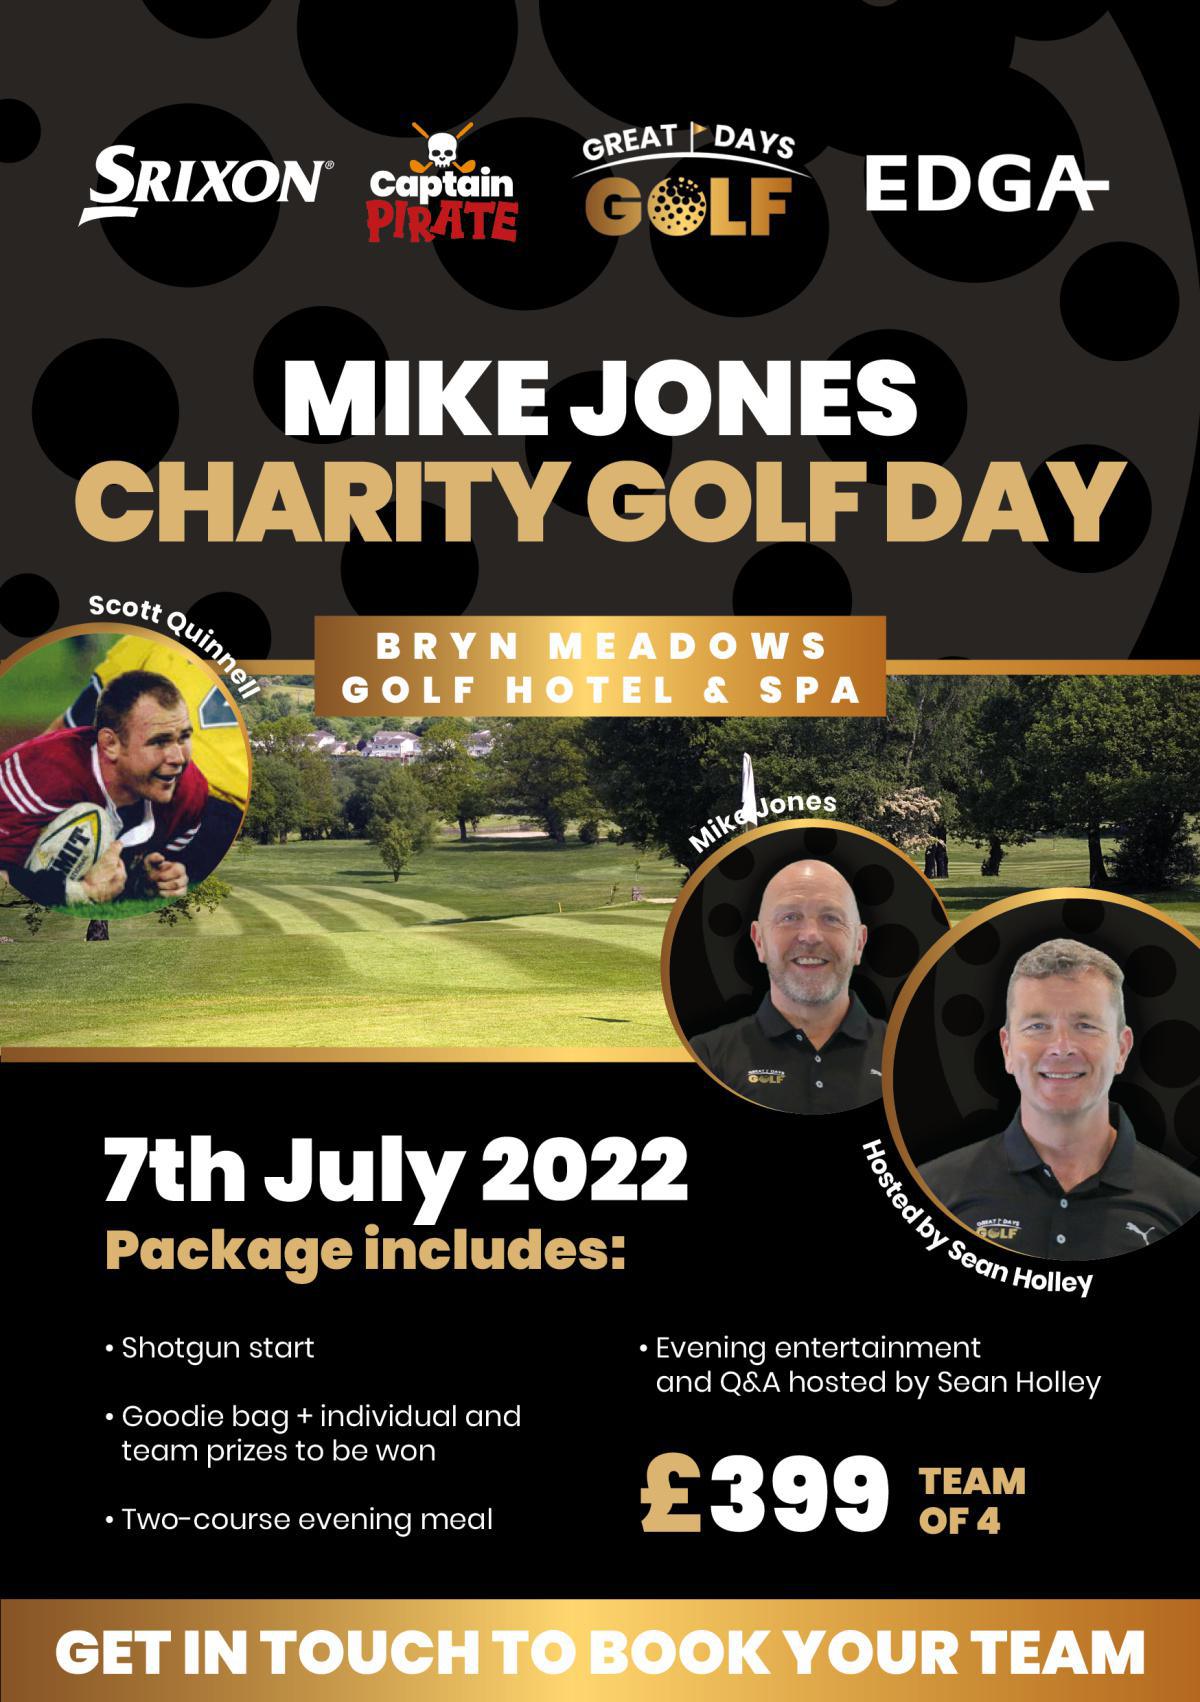 Mike Jones Charity Golf Day